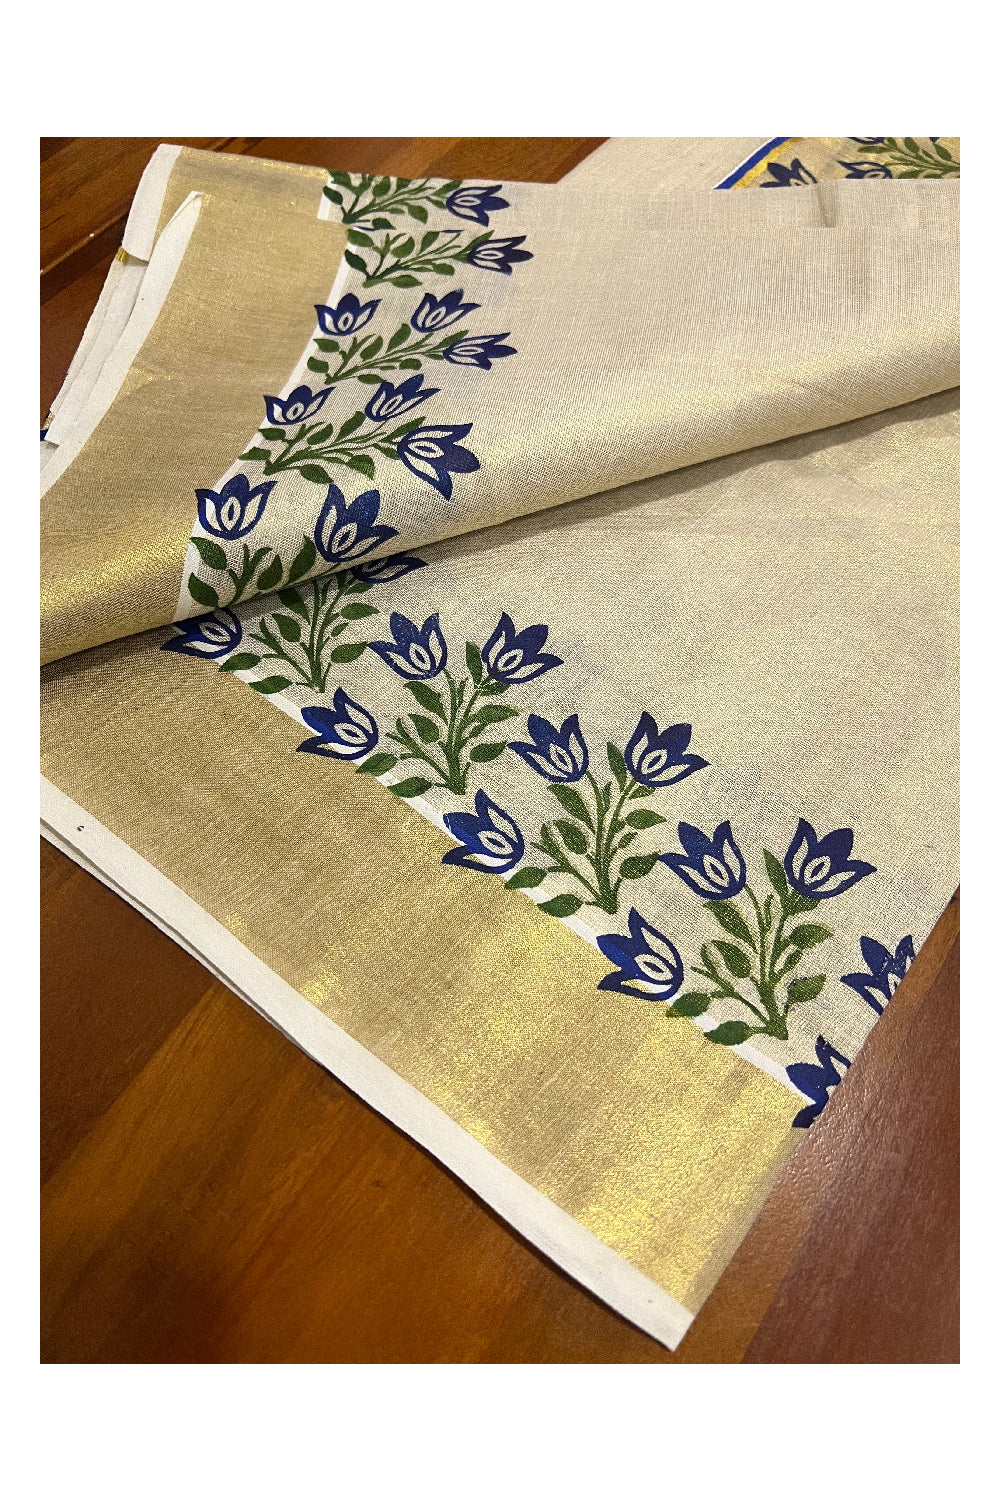 Kerala Tissue Kasavu Set Mundu (Mundum Neriyathum) with Blue Floral Block Prints on Border